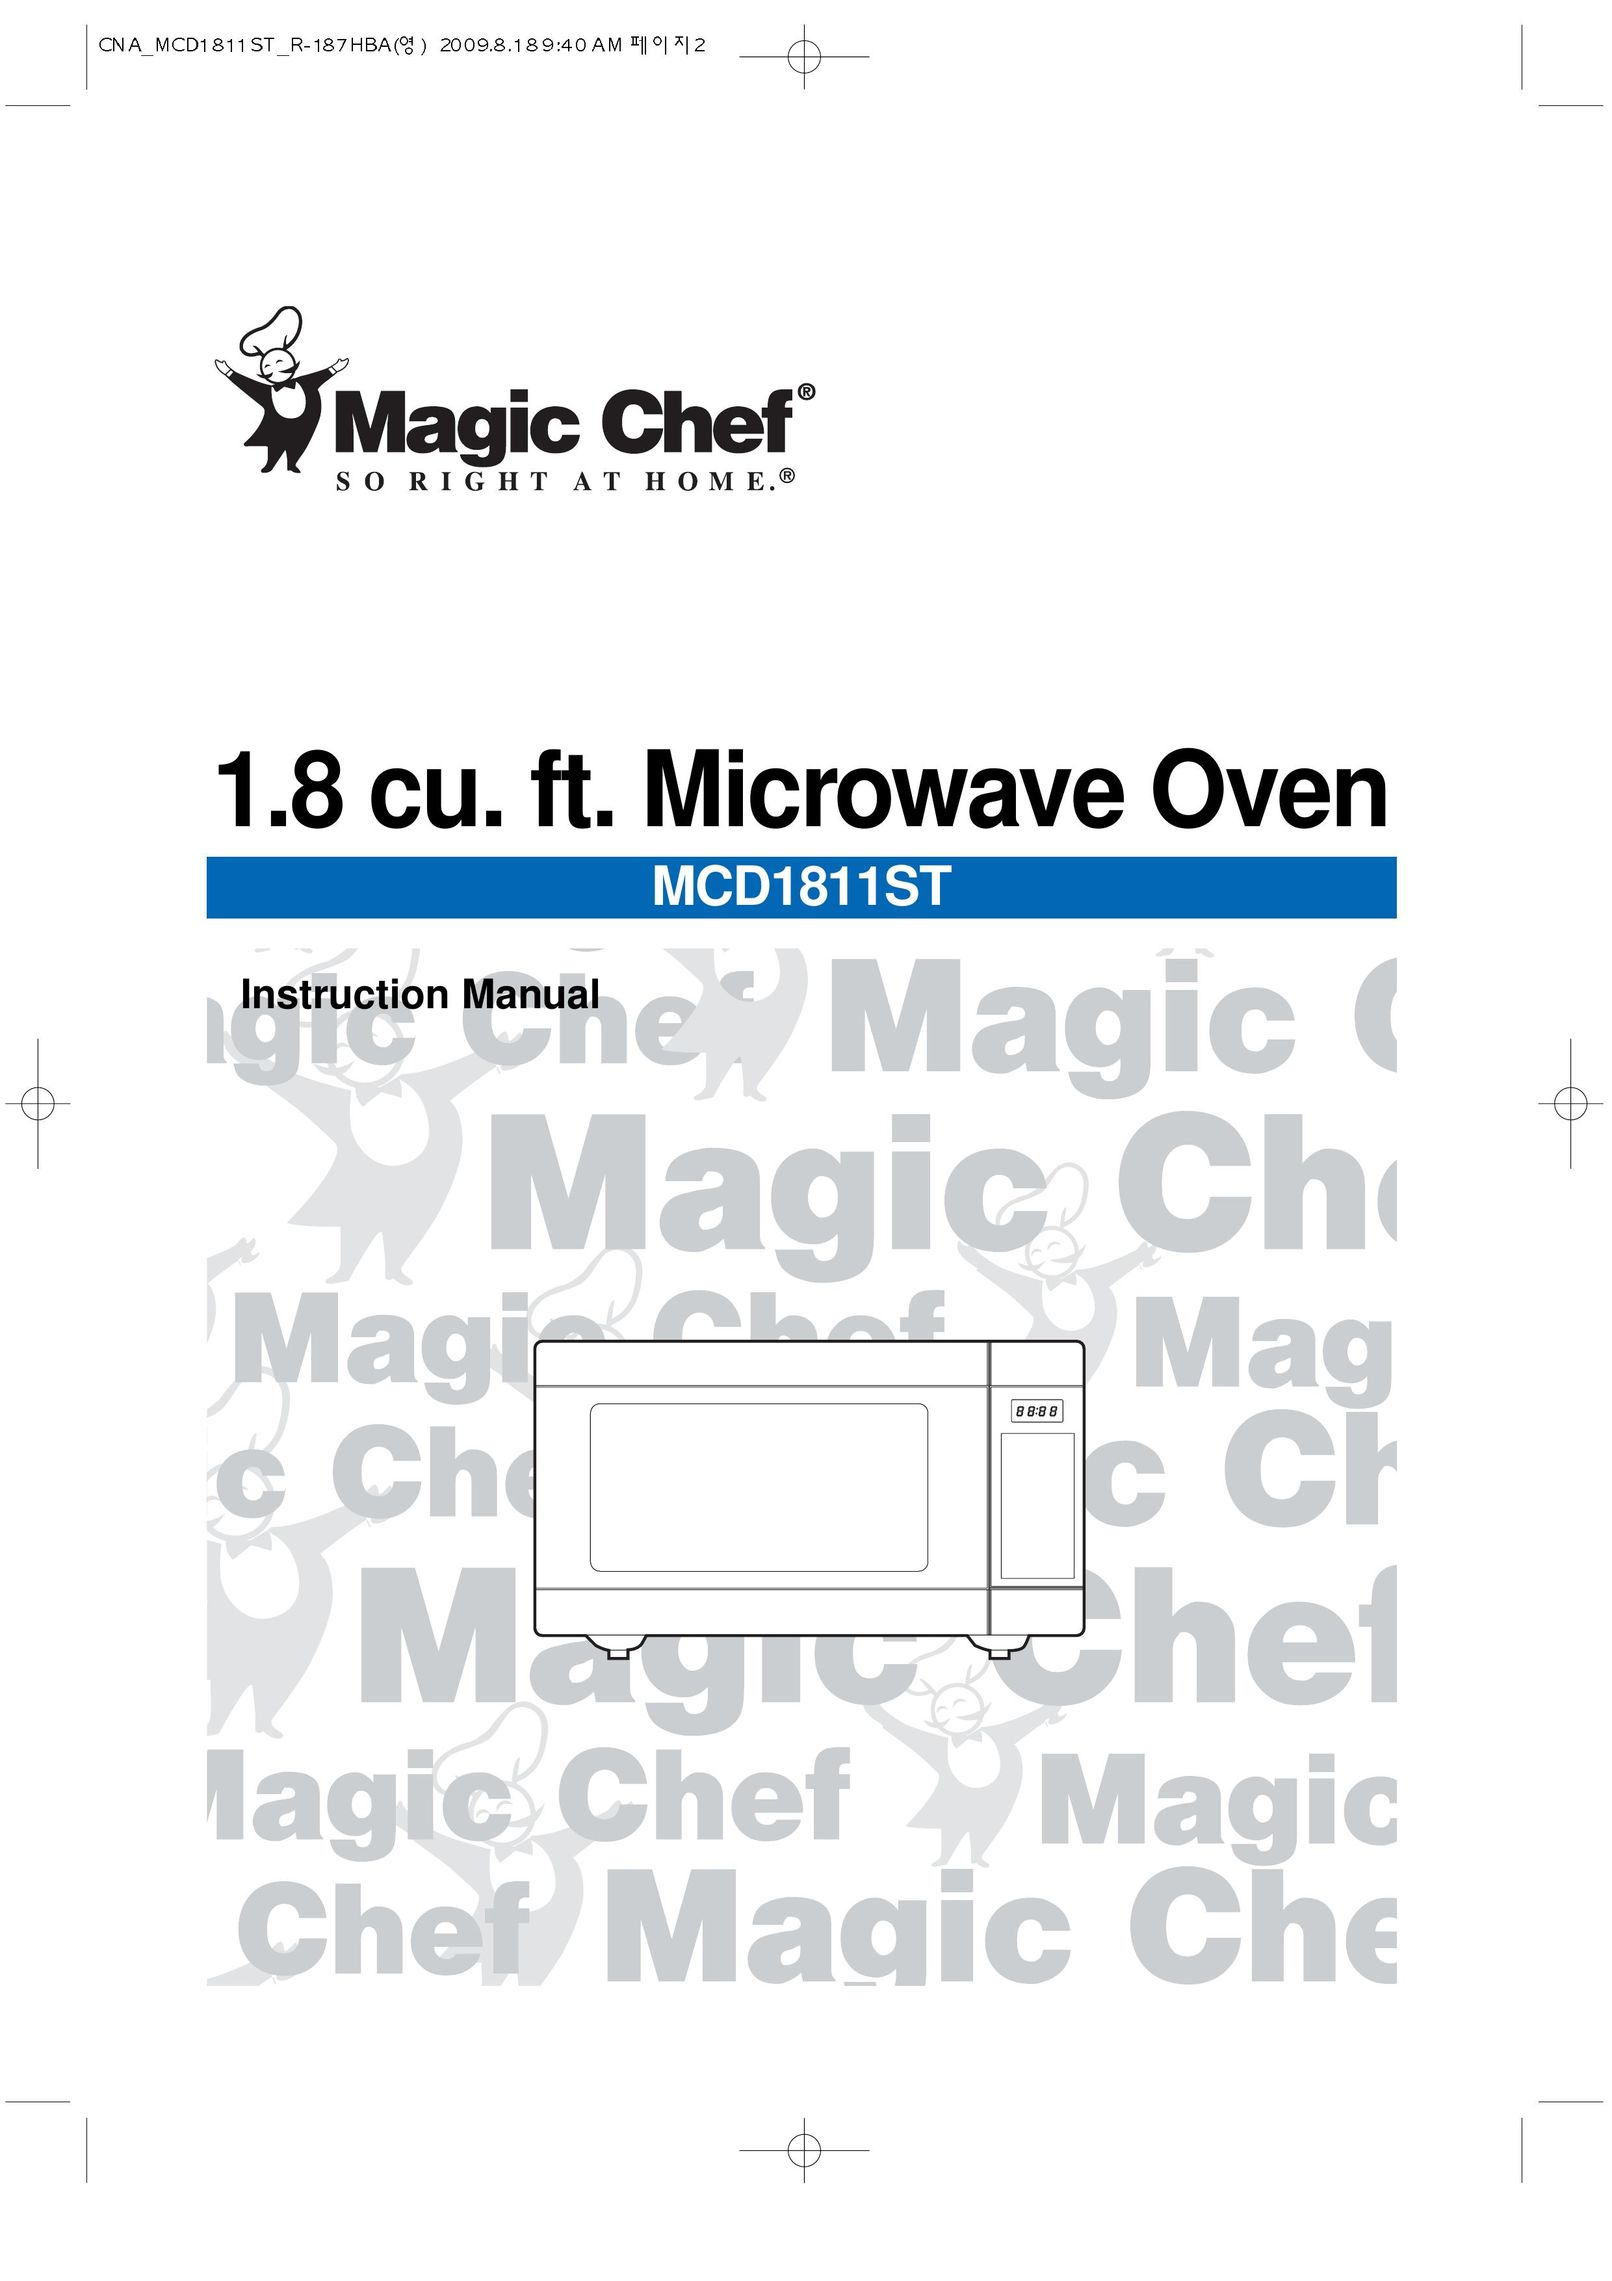 Magic Chef MCD1811ST Microwave Oven User Manual